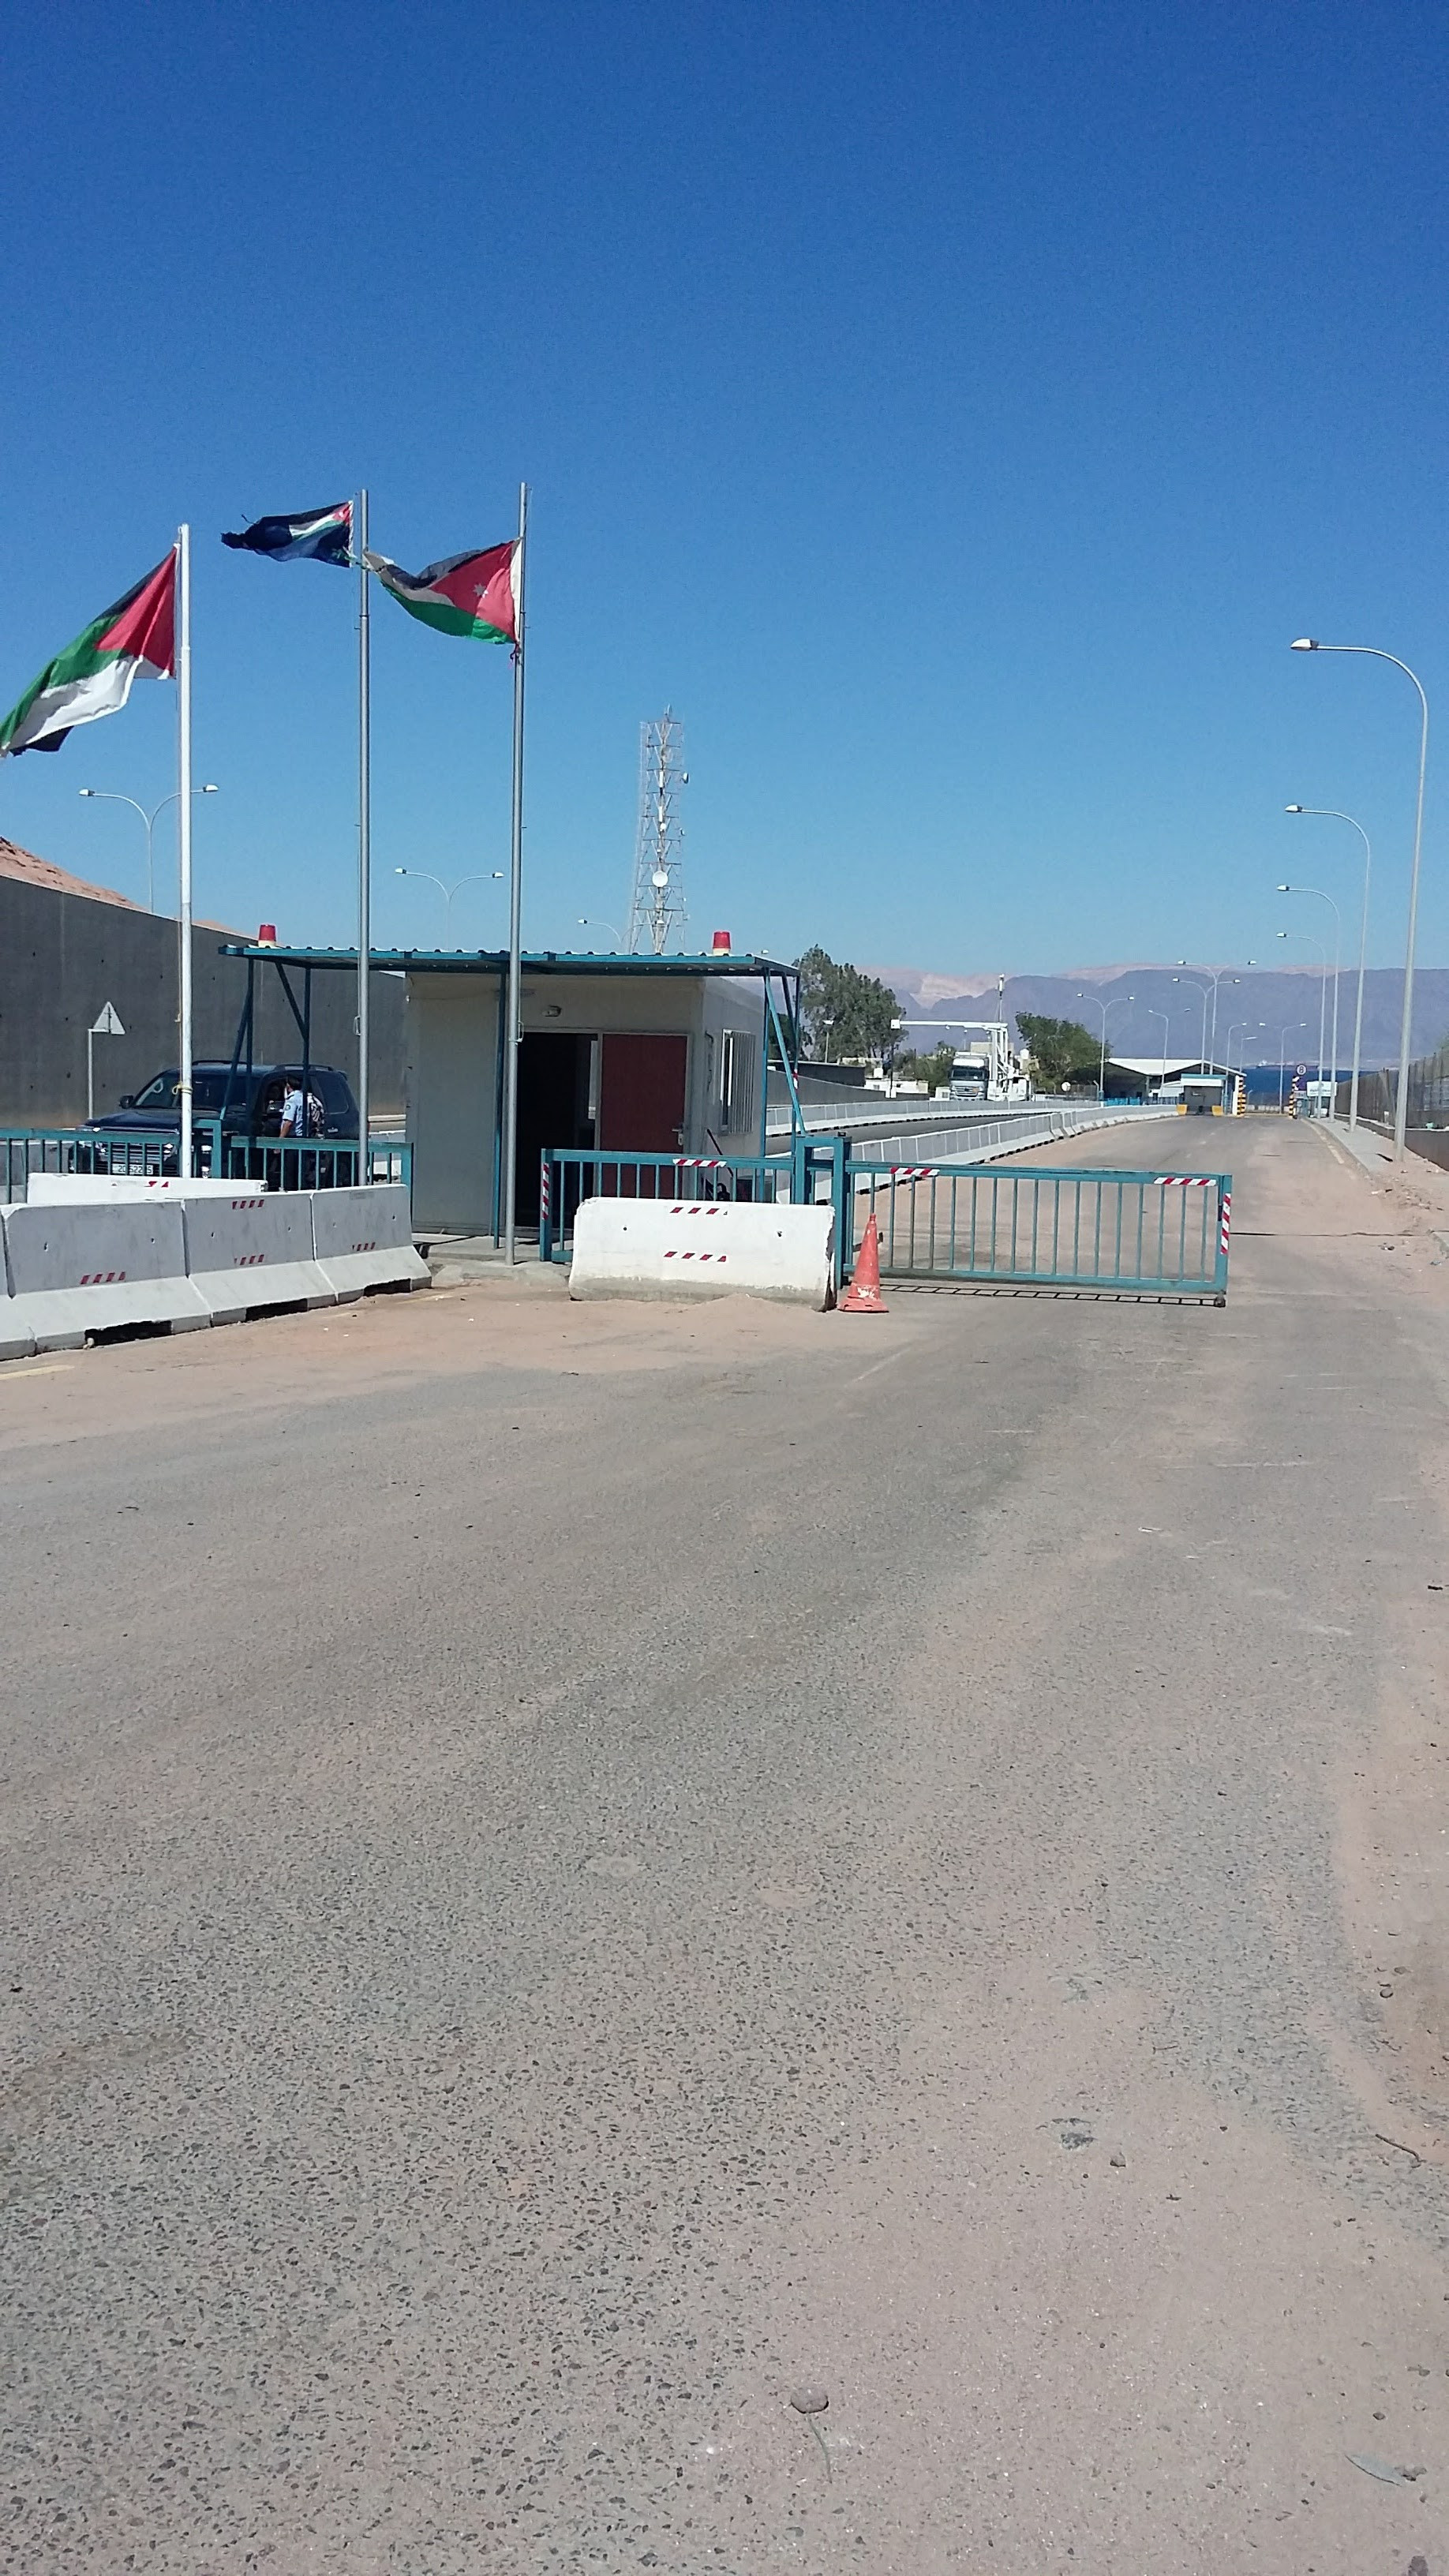 Jordan/Saudi Arabia border checkpoint